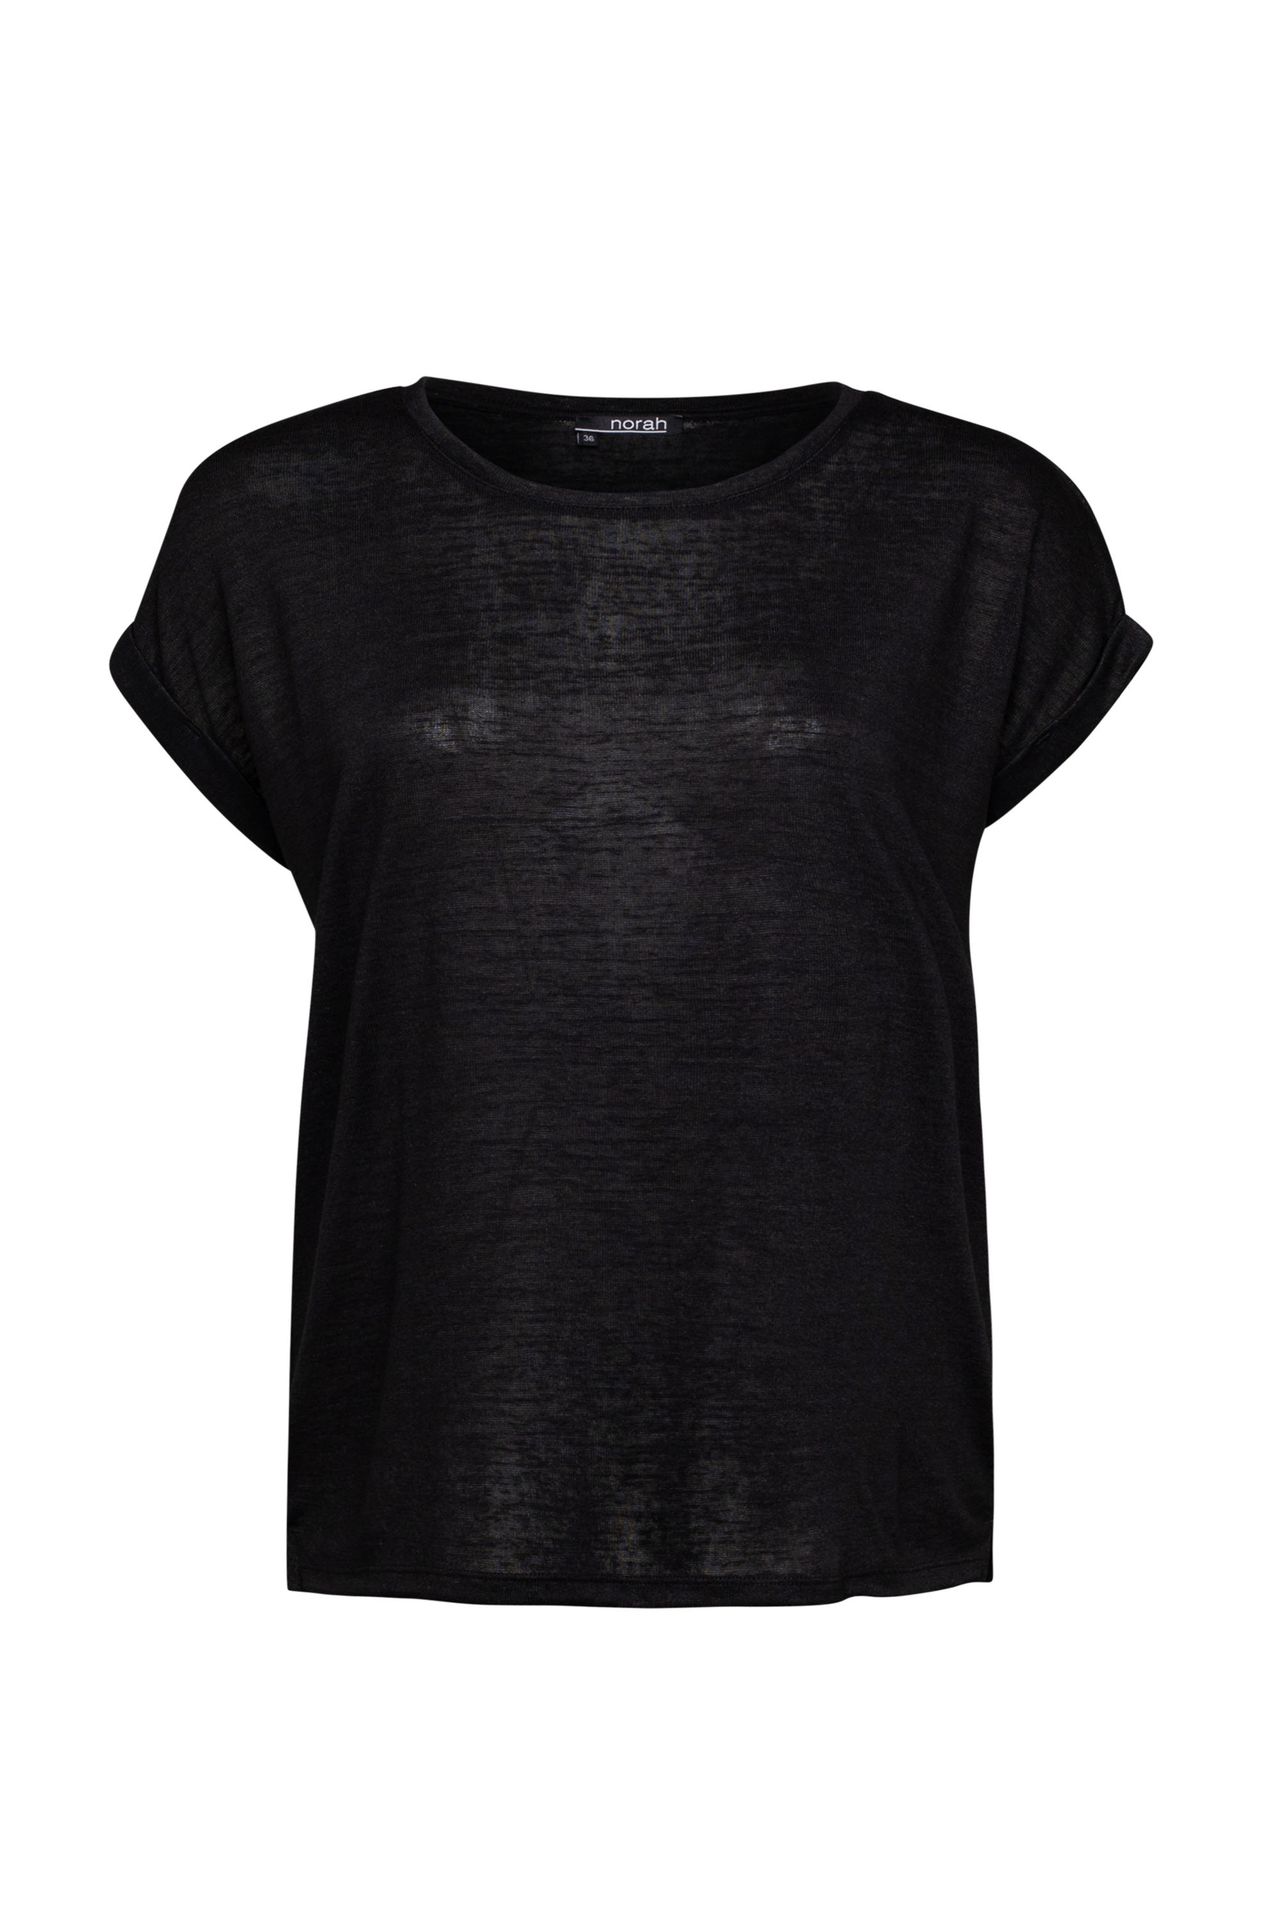 Norah Zwart shirt black 211185-001